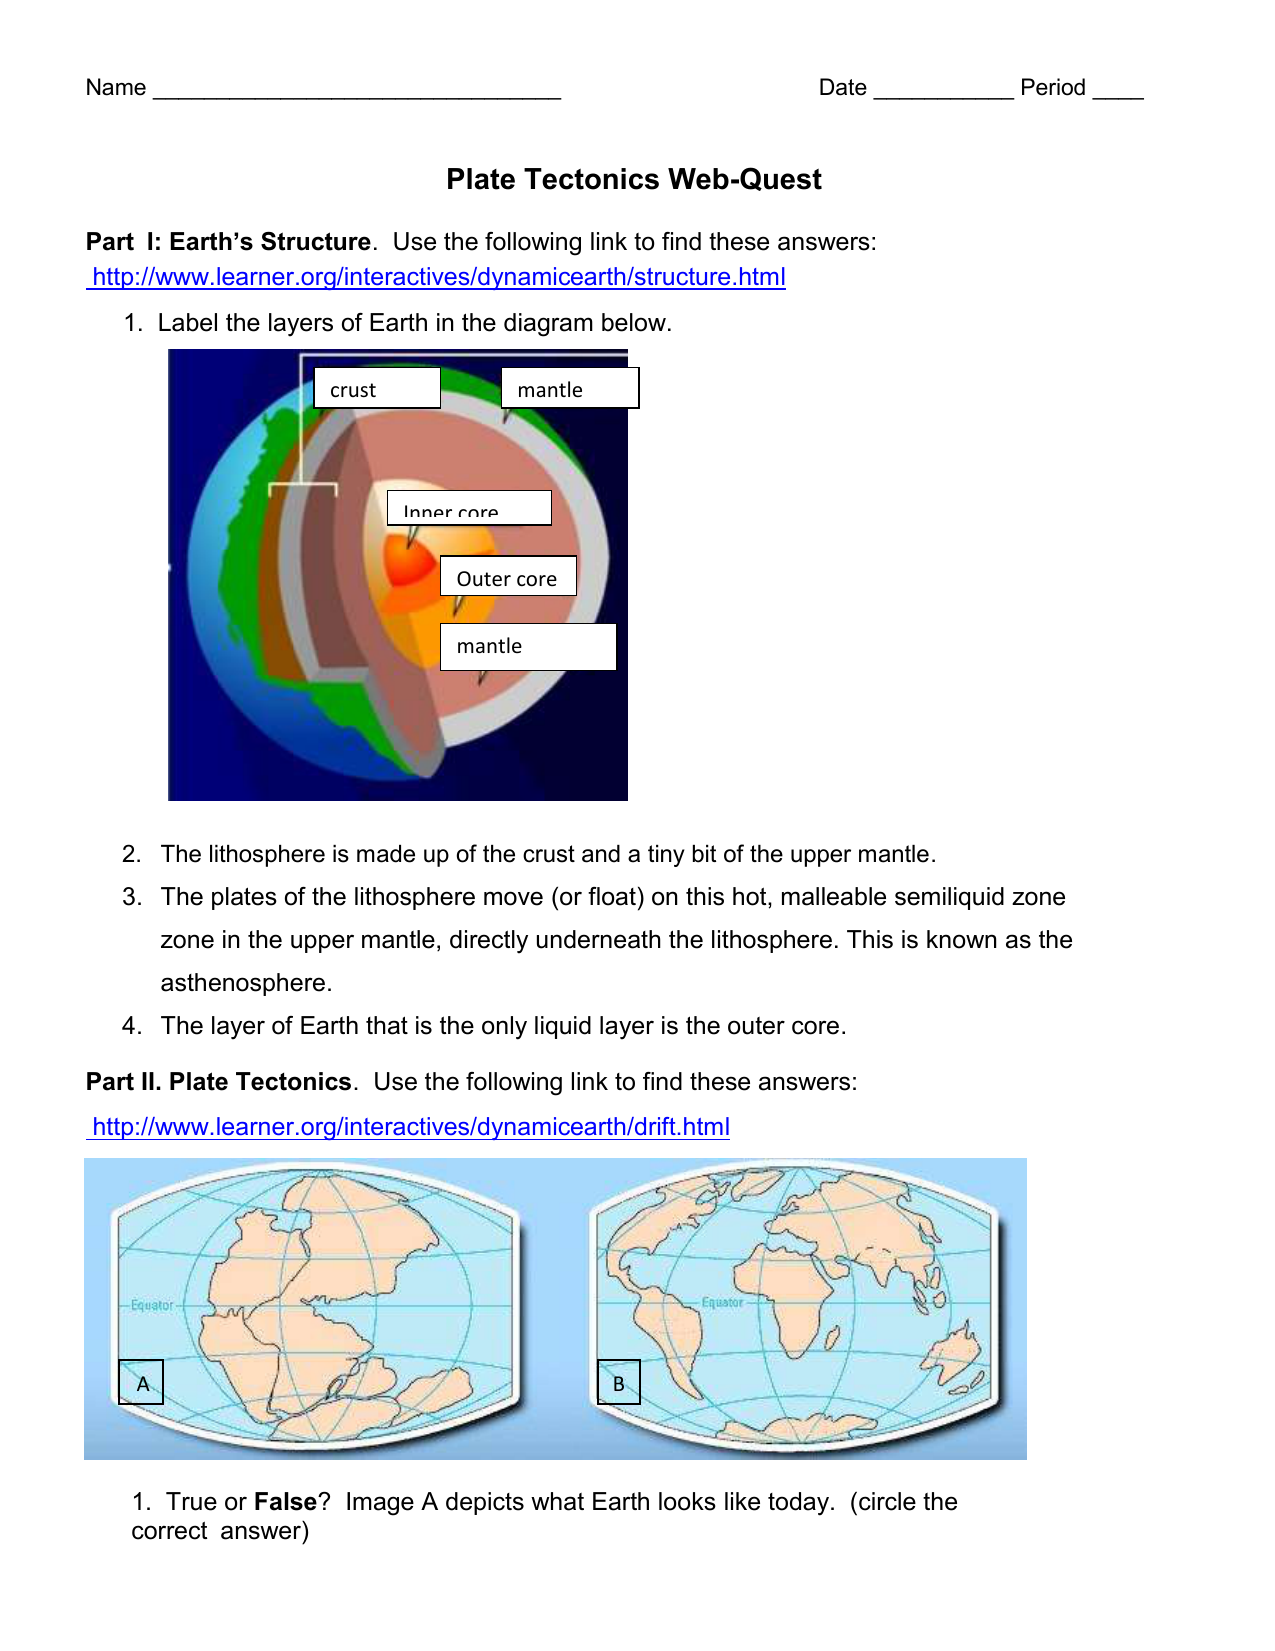 Plate Tectonics Webquest